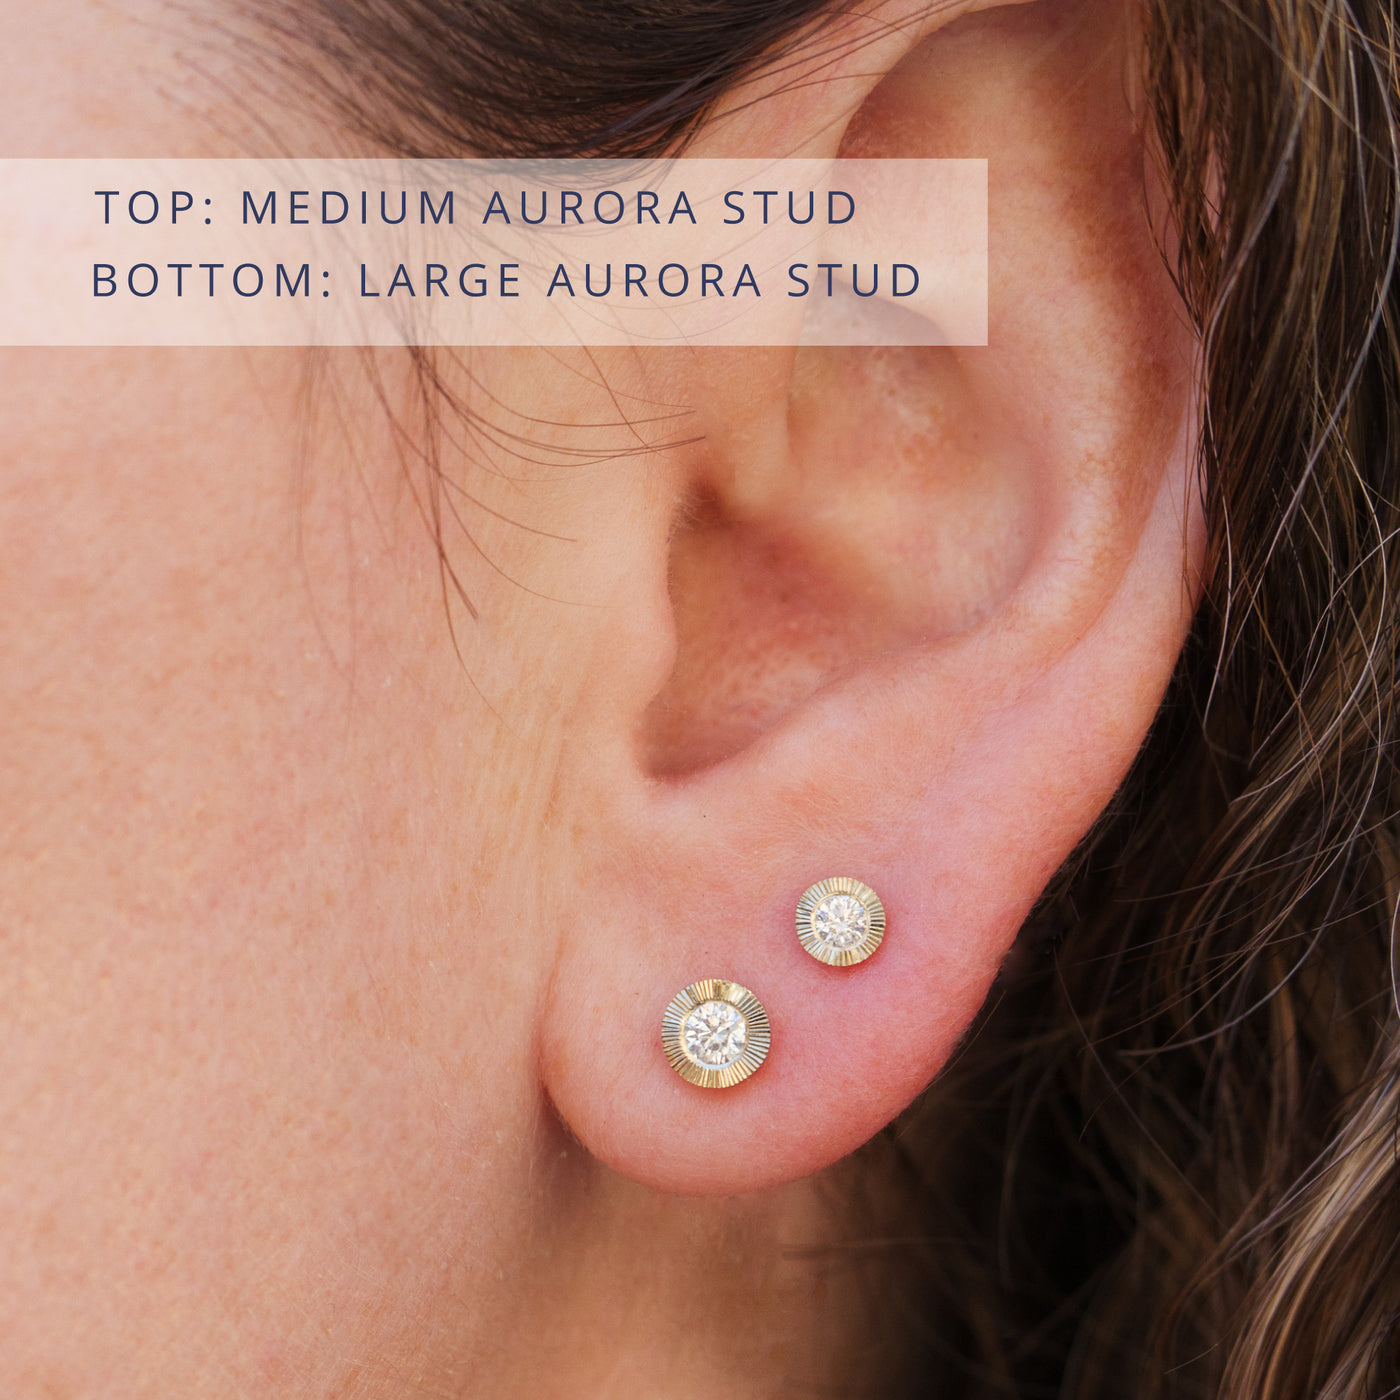 Aurora stud earrings on an ear. Top: Small yellow gold Aurora stud earring with a diamond center, bottom: Large yellow gold Aurora stud earring with diamond center